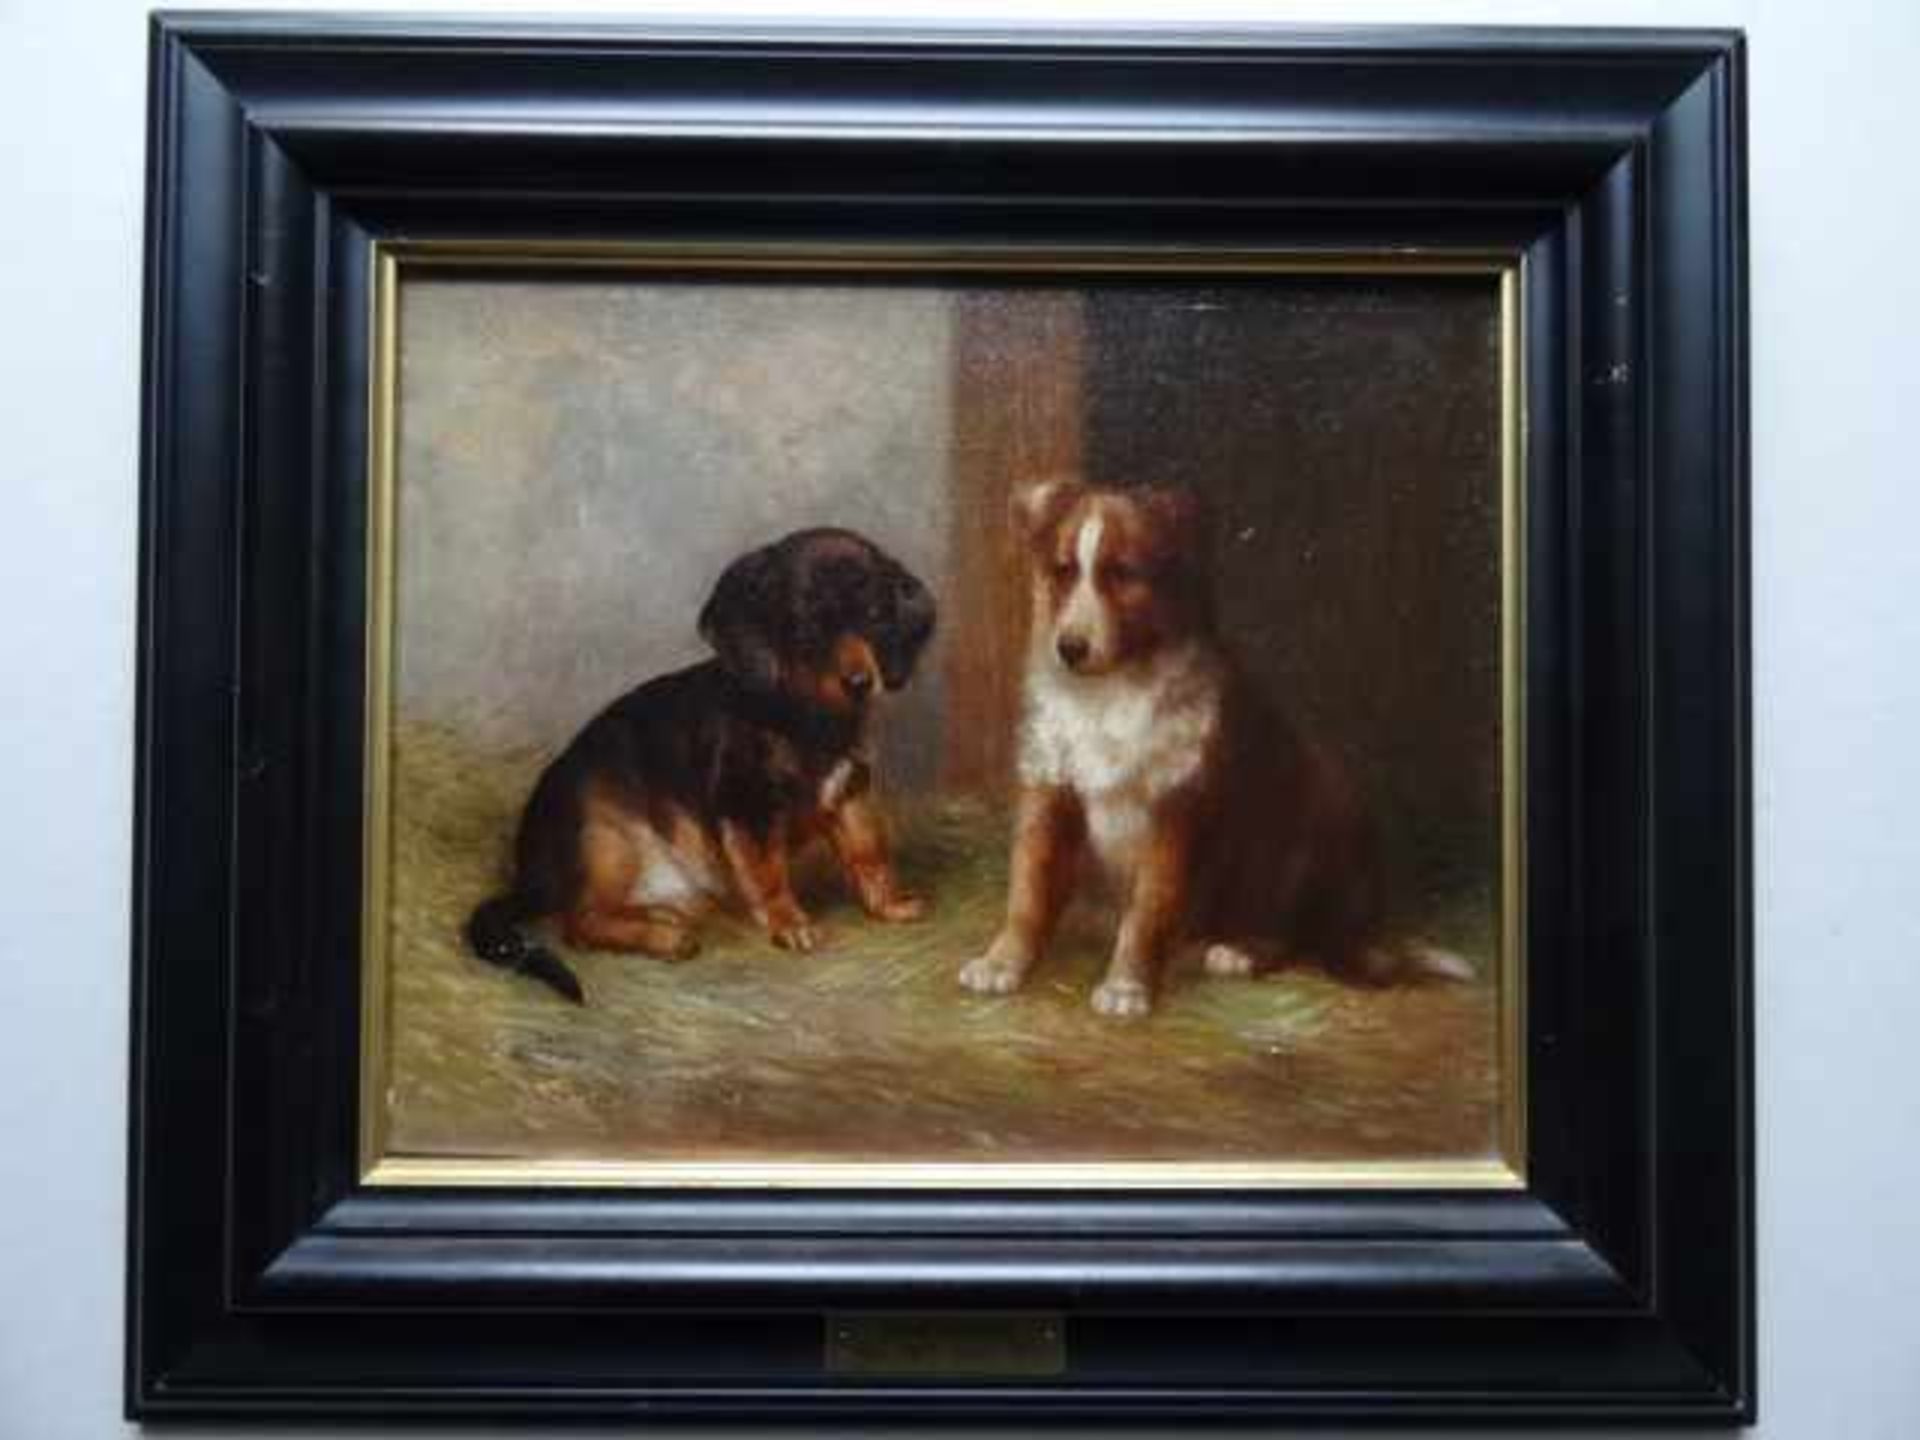 Heimerl, Josef (Wien 1867 - nach 1918). Zwei Hundewelpen. Öl auf Leinwand. Um 1899. Oben rechts